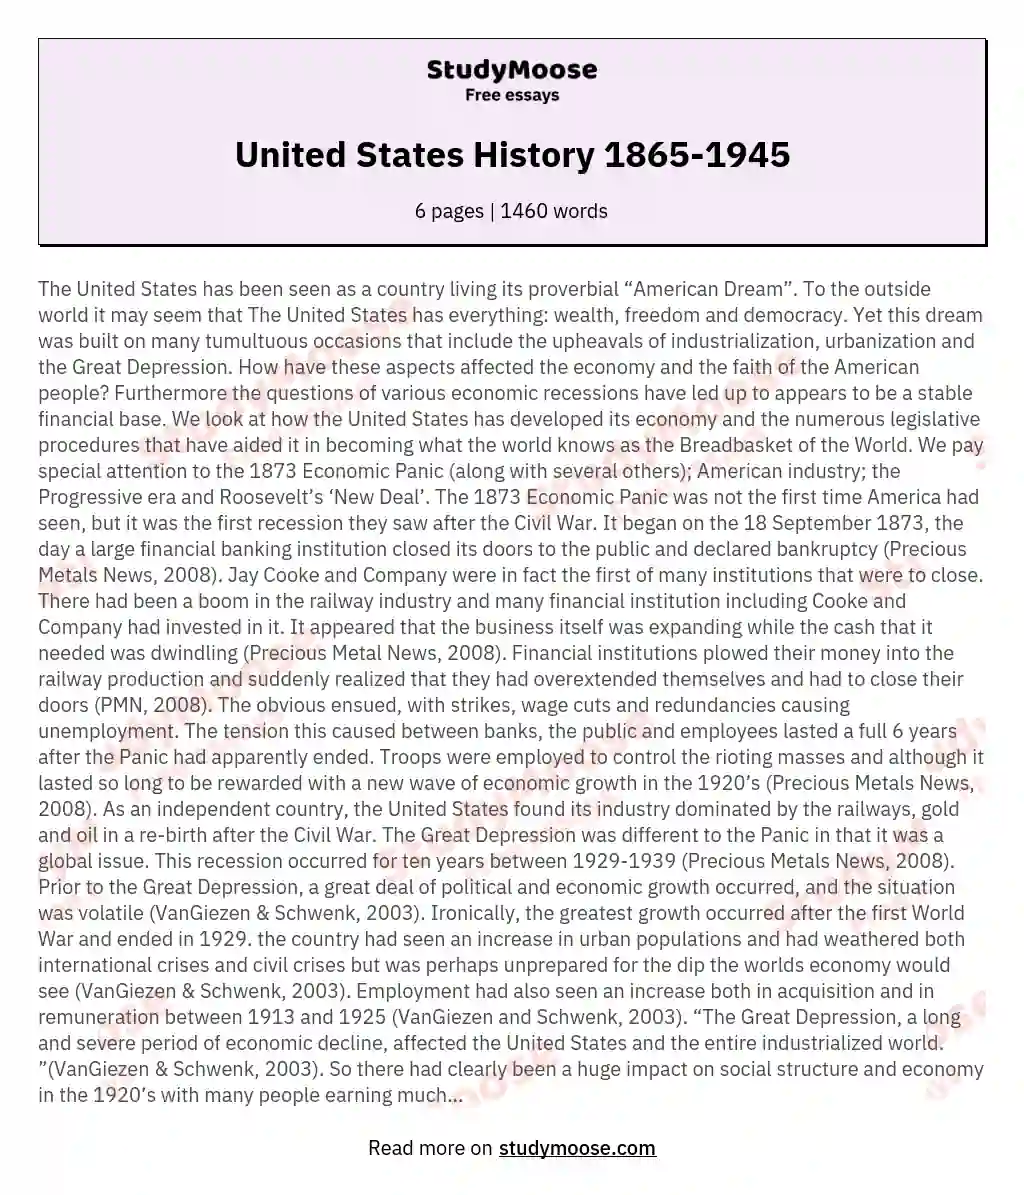 United States History 1865-1945 essay